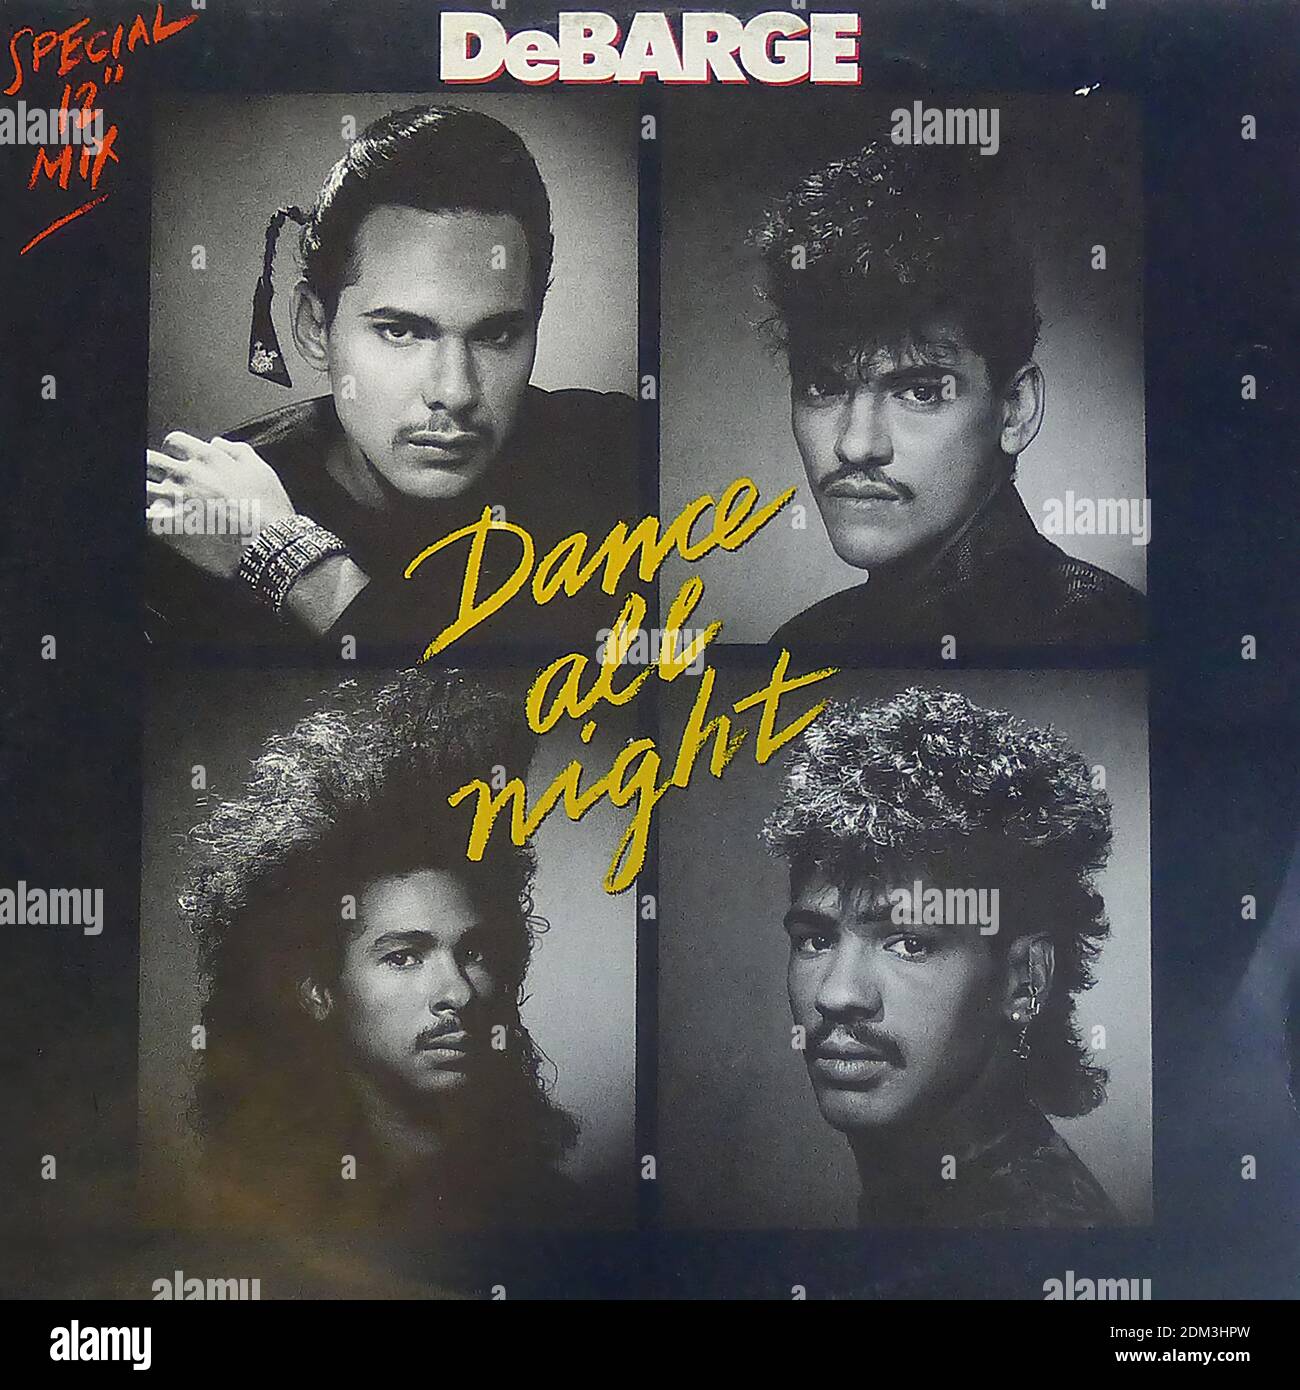 DEBARGE   DANCE ALL NIGHT 12  MAXI VINYL  - Vintage Vinyl Record Cover Stock Photo